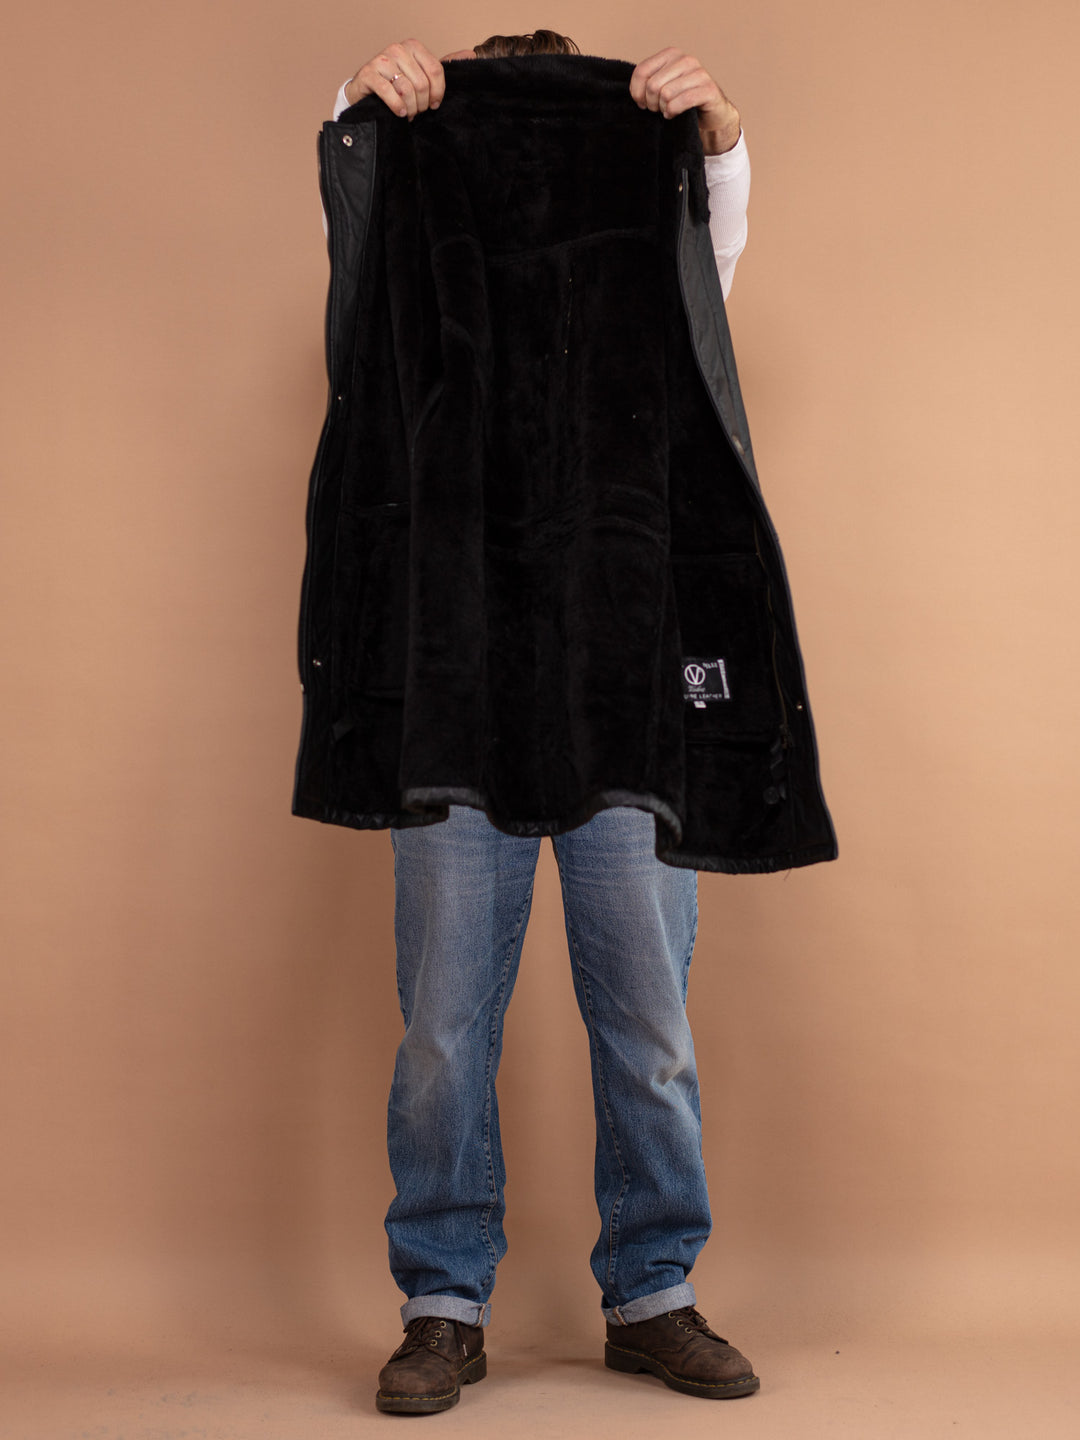 Black Leather Sherpa Coat 90's, Size Large, Vintage Men Leather Coat, Minimalist Style Zip Up Winter Coat, Gift for Men, Faux Sheepskin Coat